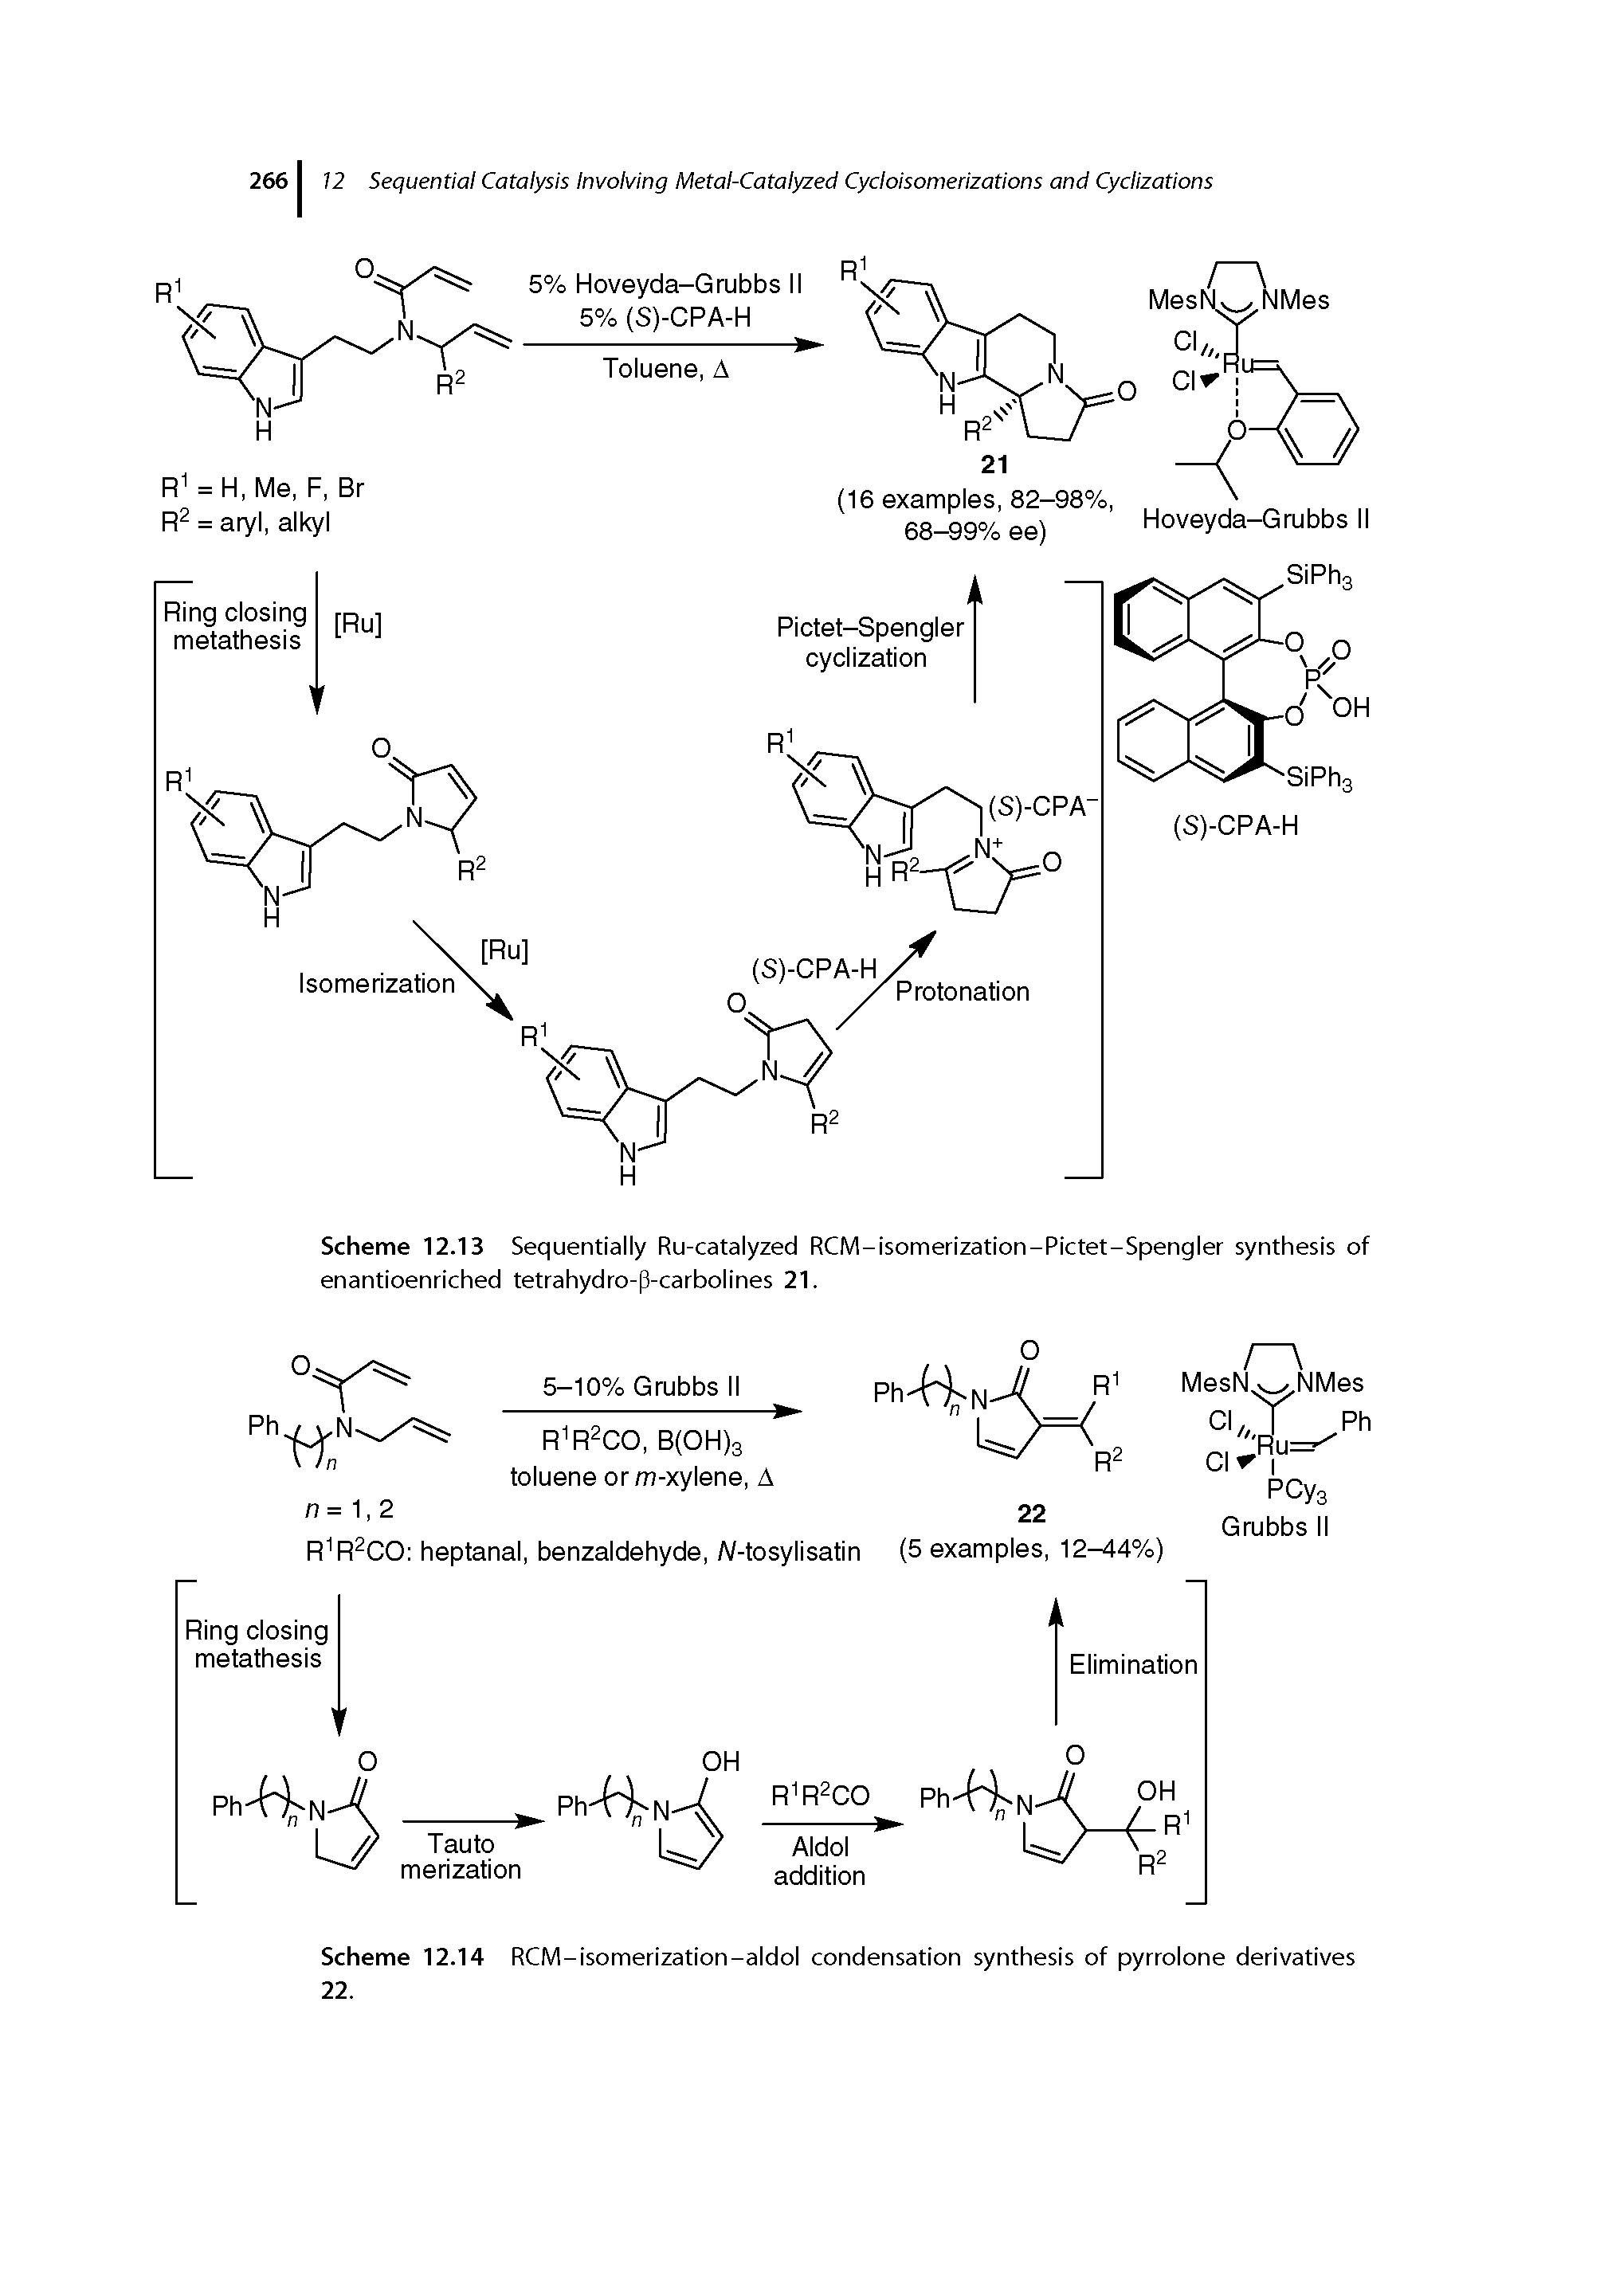 Scheme 12.14 RCM-isomerization-aldol condensation synthesis of pyrrolone derivatives 22.